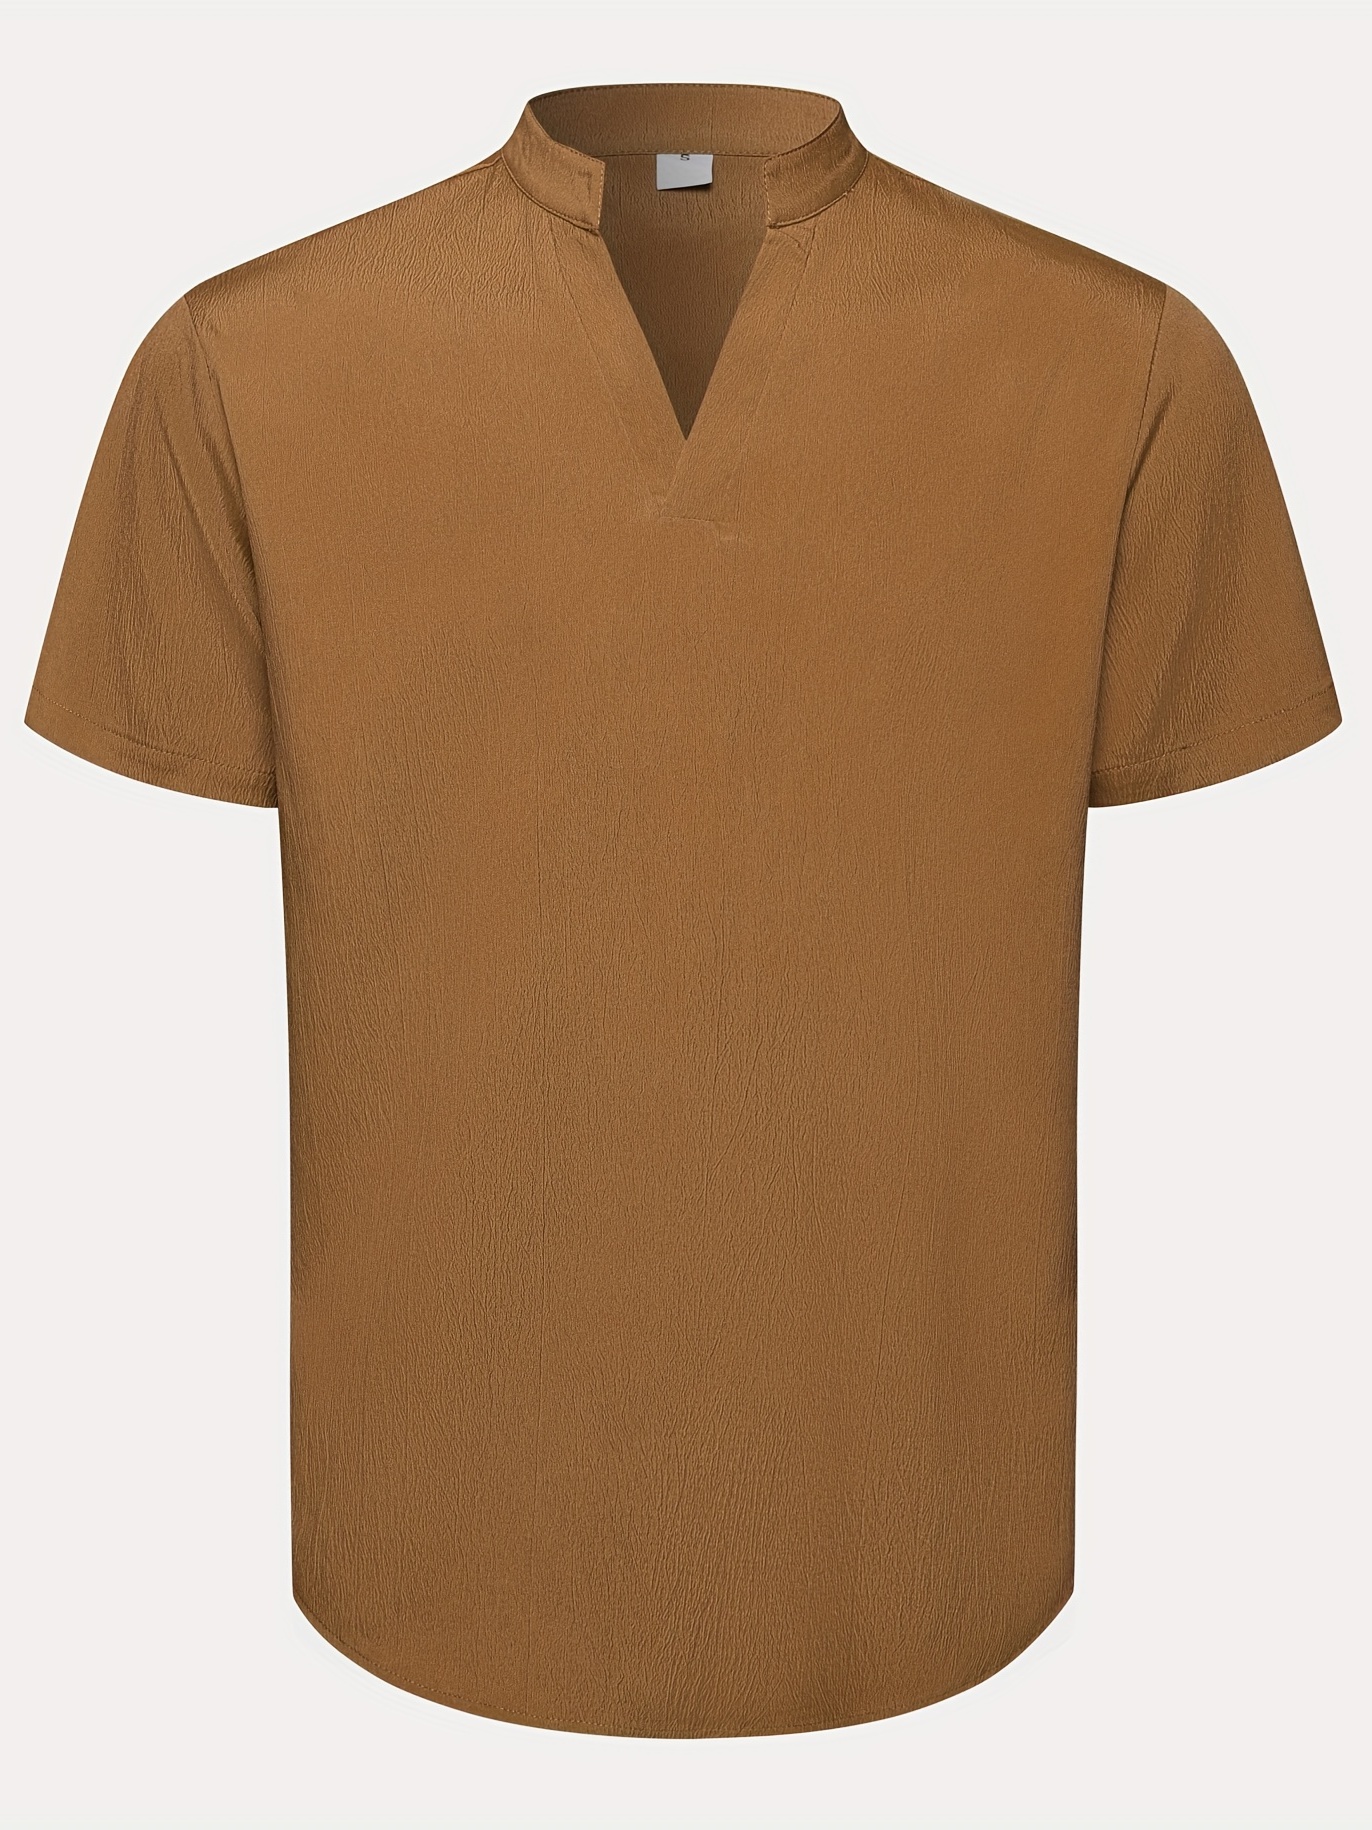 mens casual v neck short sleeve shirt mens shirt for summer vacation resort tops for men gift for men